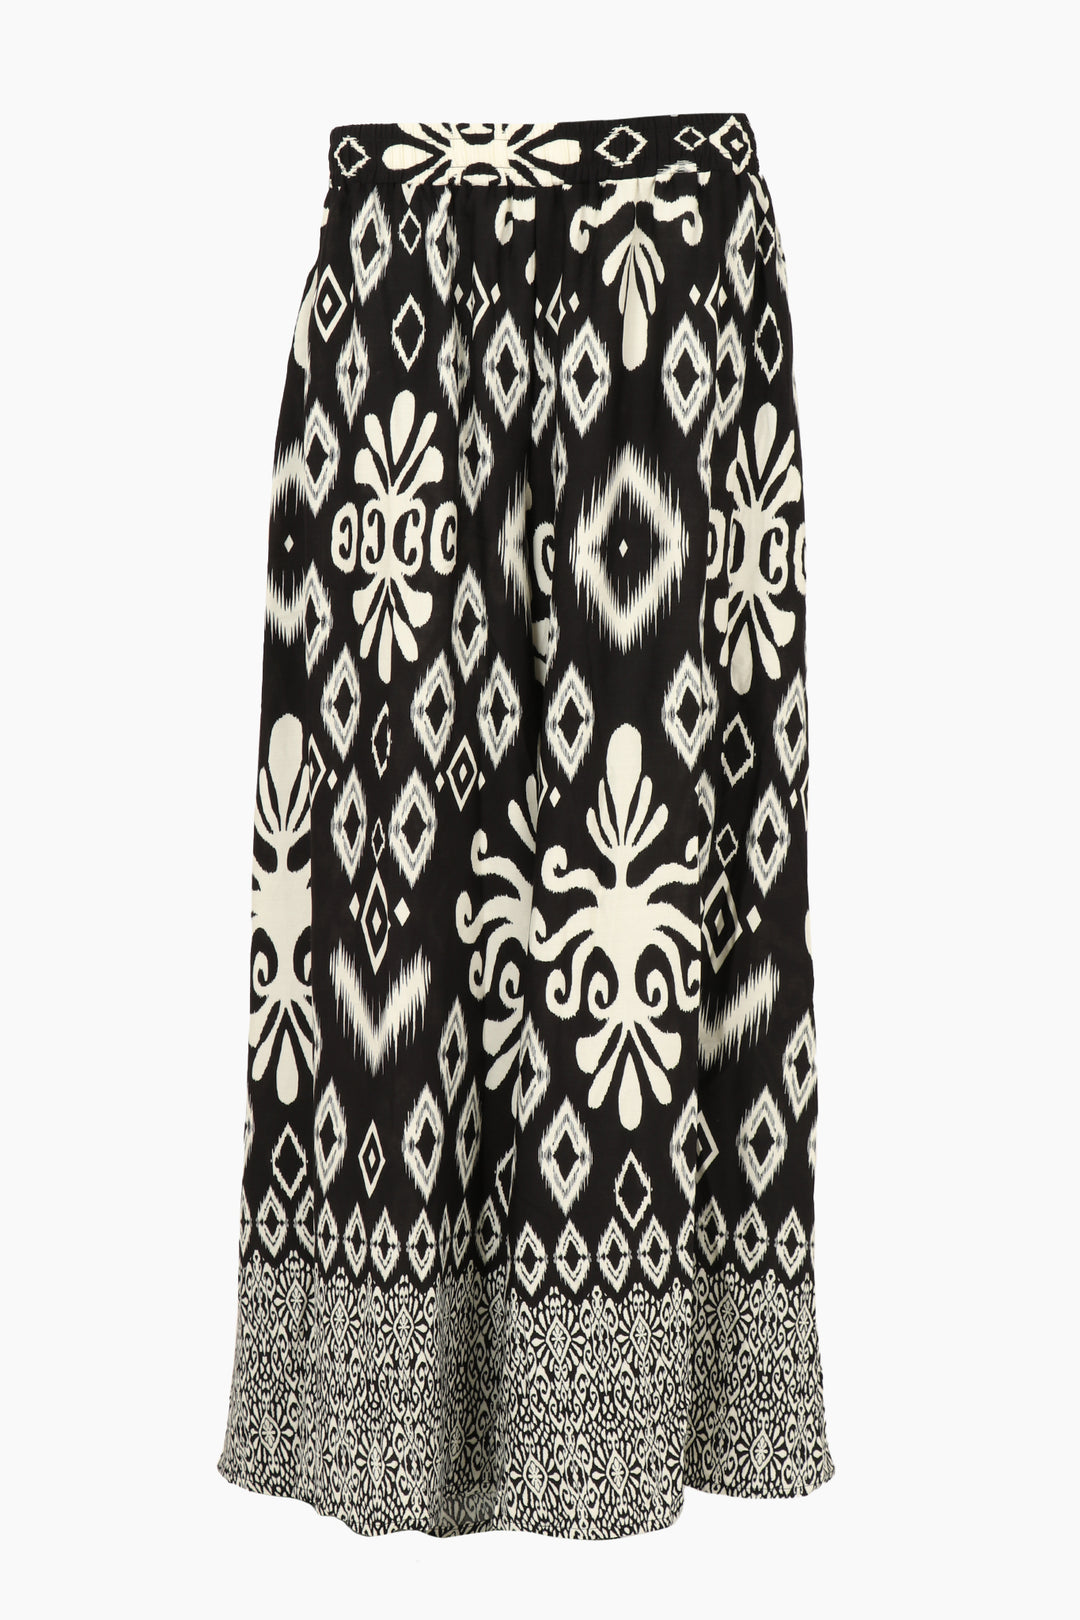 black and white ikat pattern summer palazzo trousers